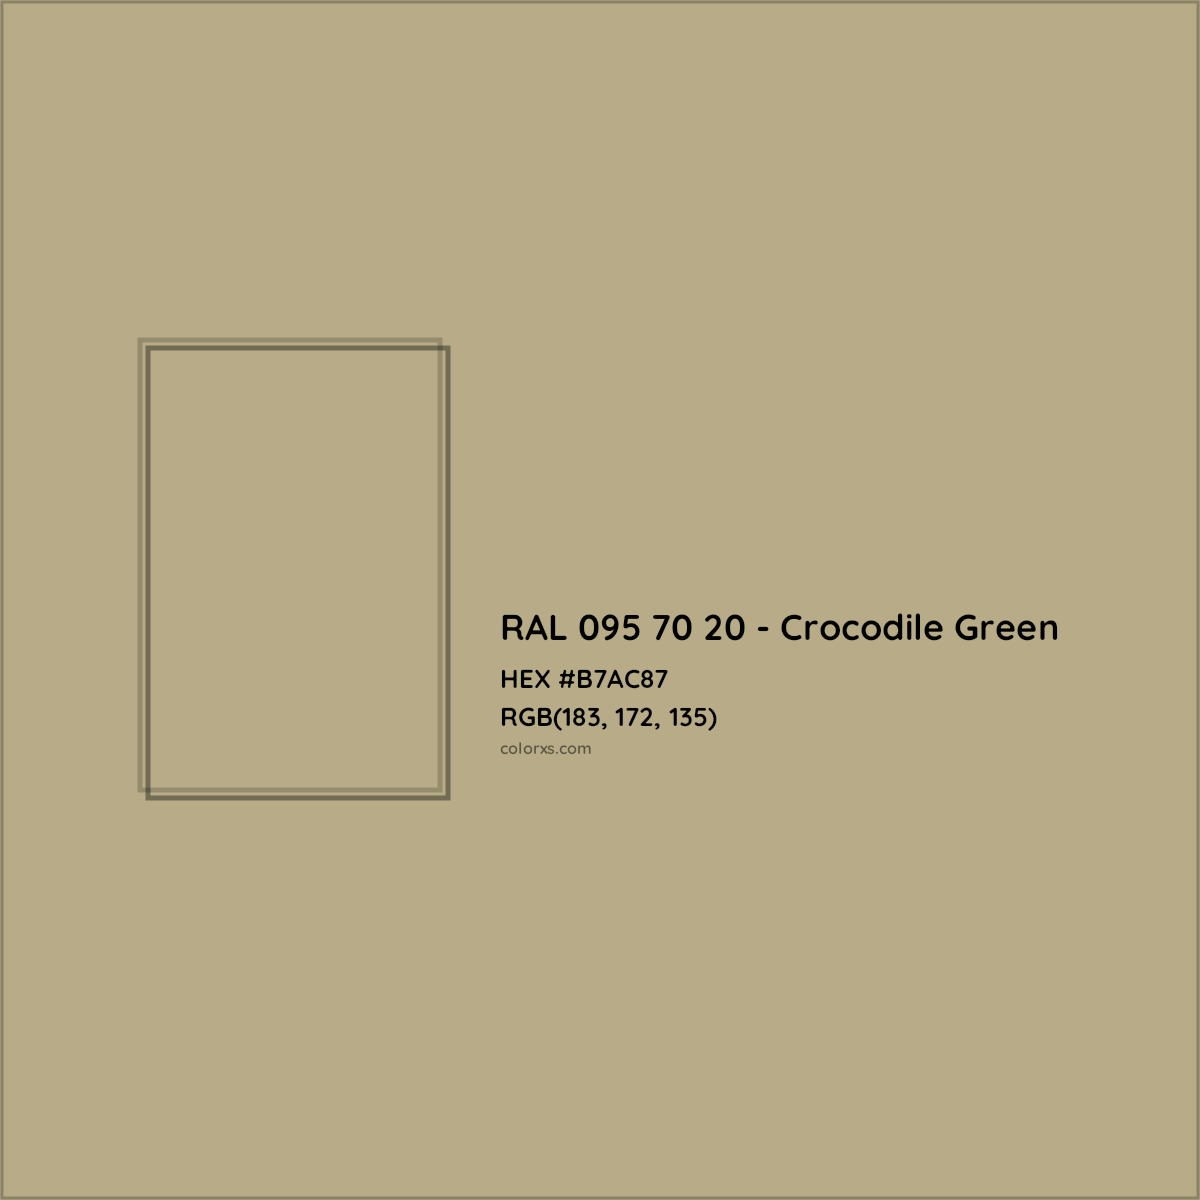 HEX #B7AC87 RAL 095 70 20 - Crocodile Green CMS RAL Design - Color Code